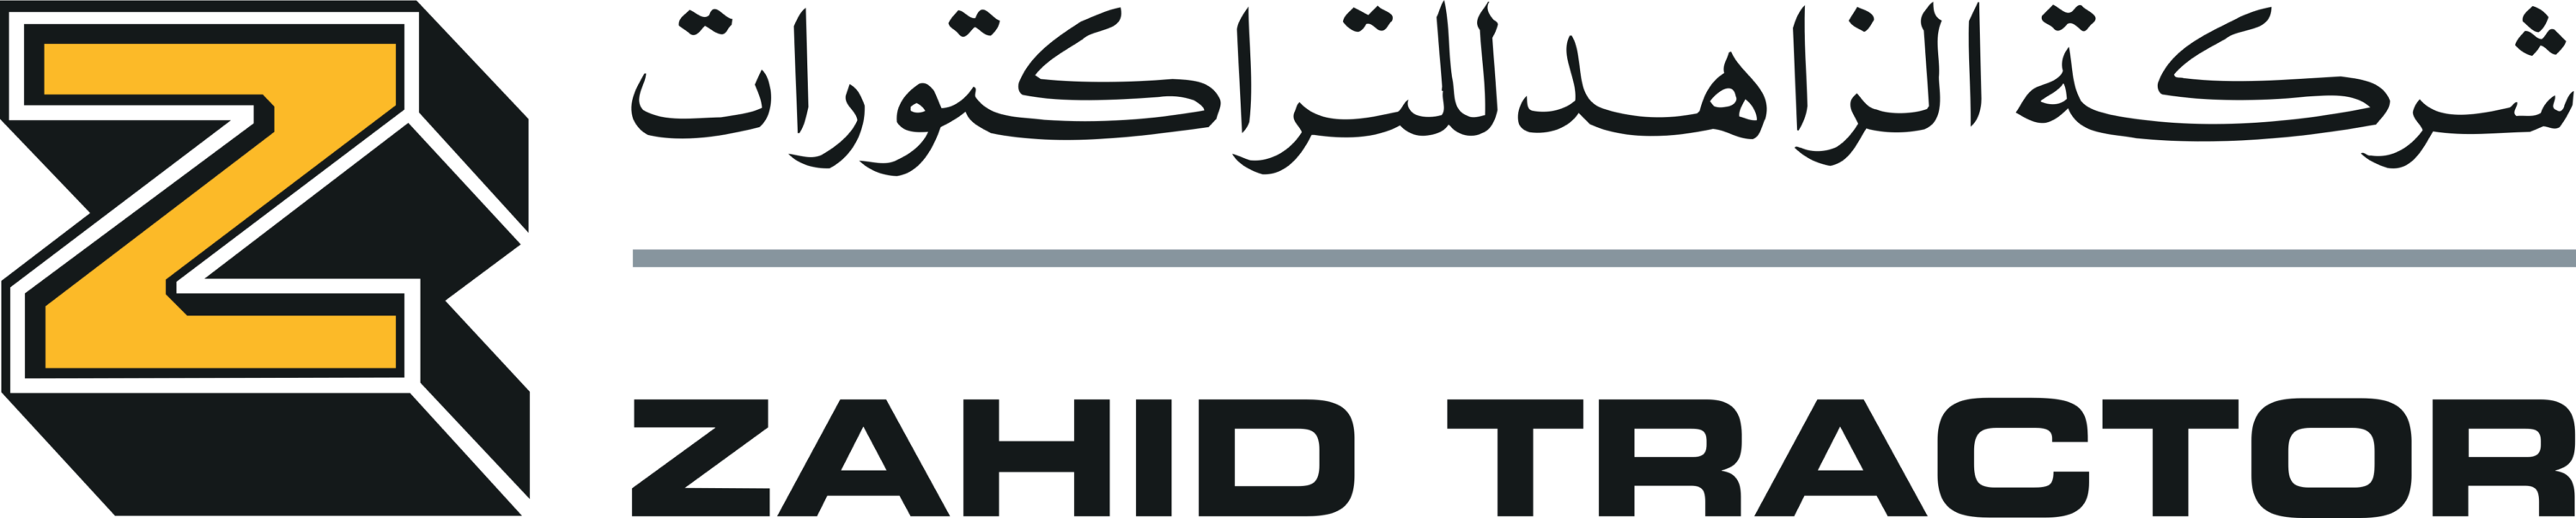 Zahid Tractor Logo